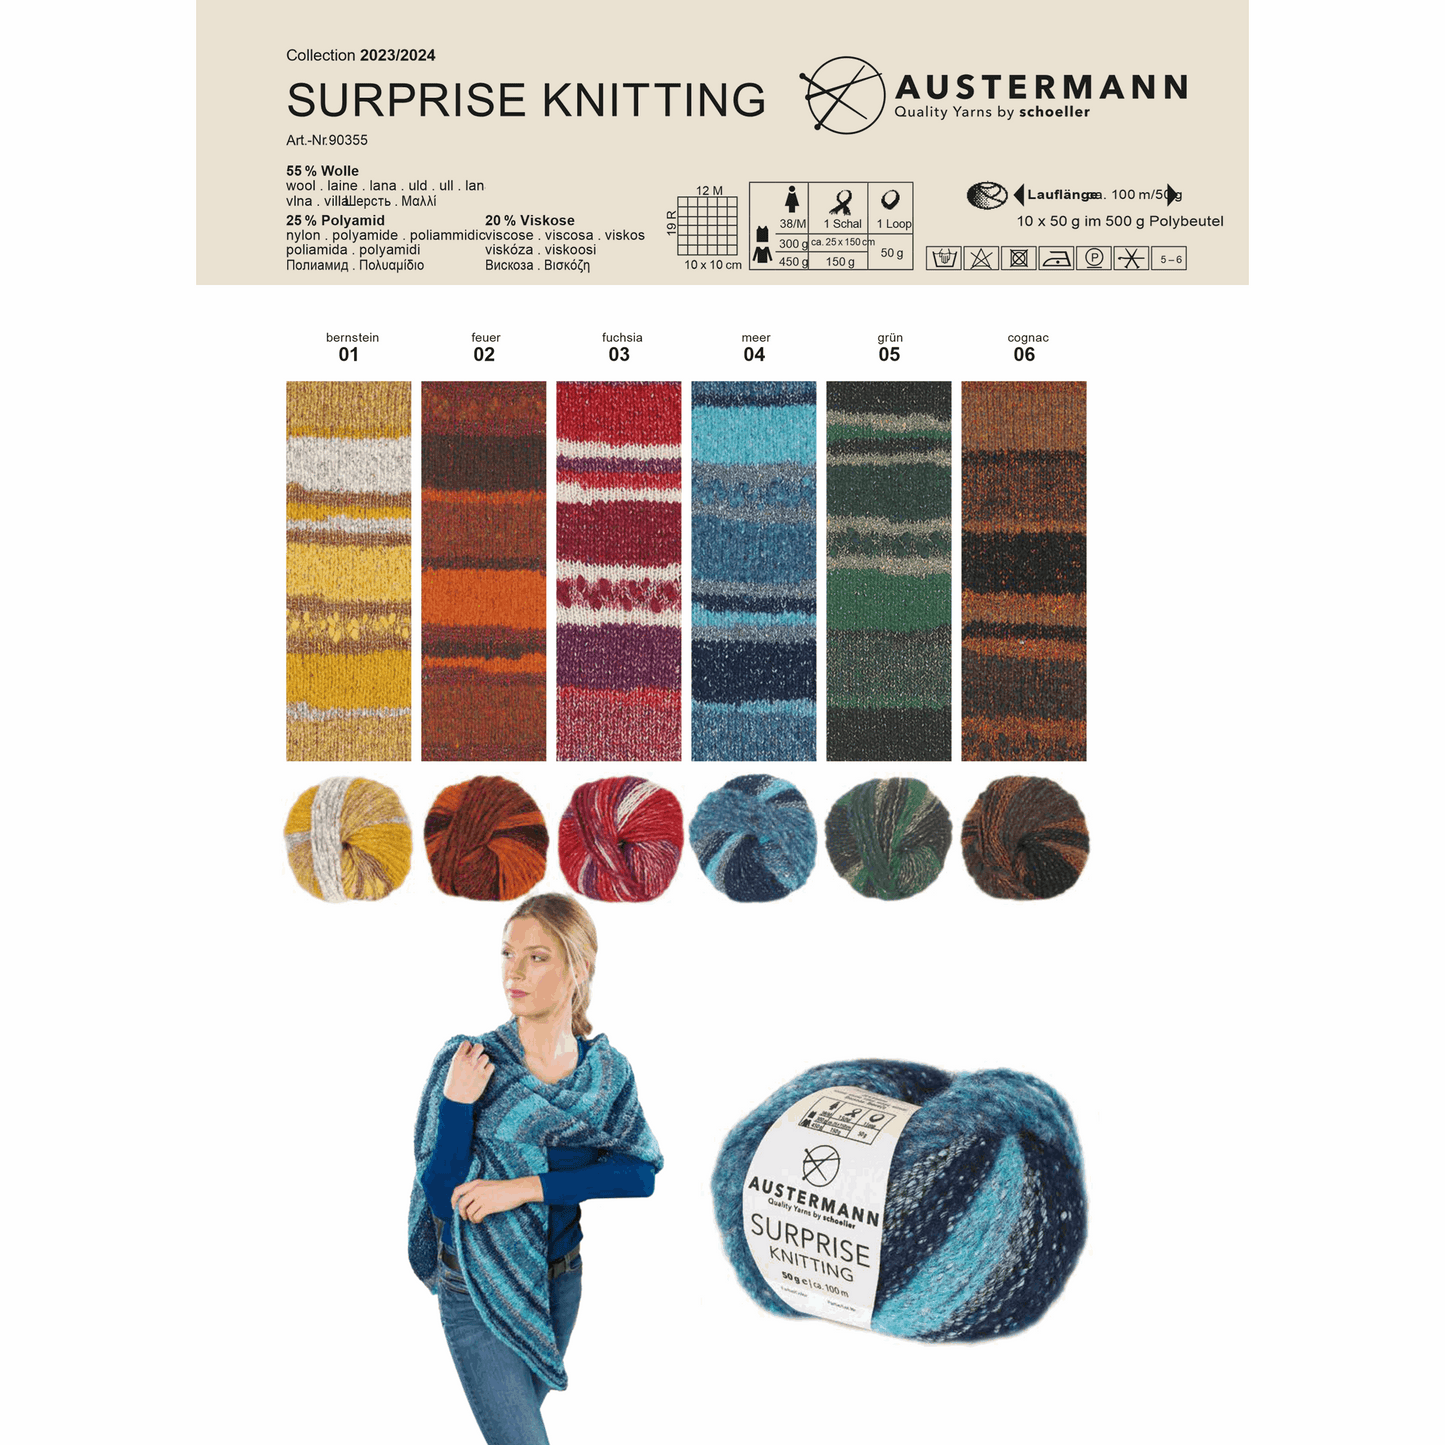 Surprise knitting 50g, 90355, color 4, azure